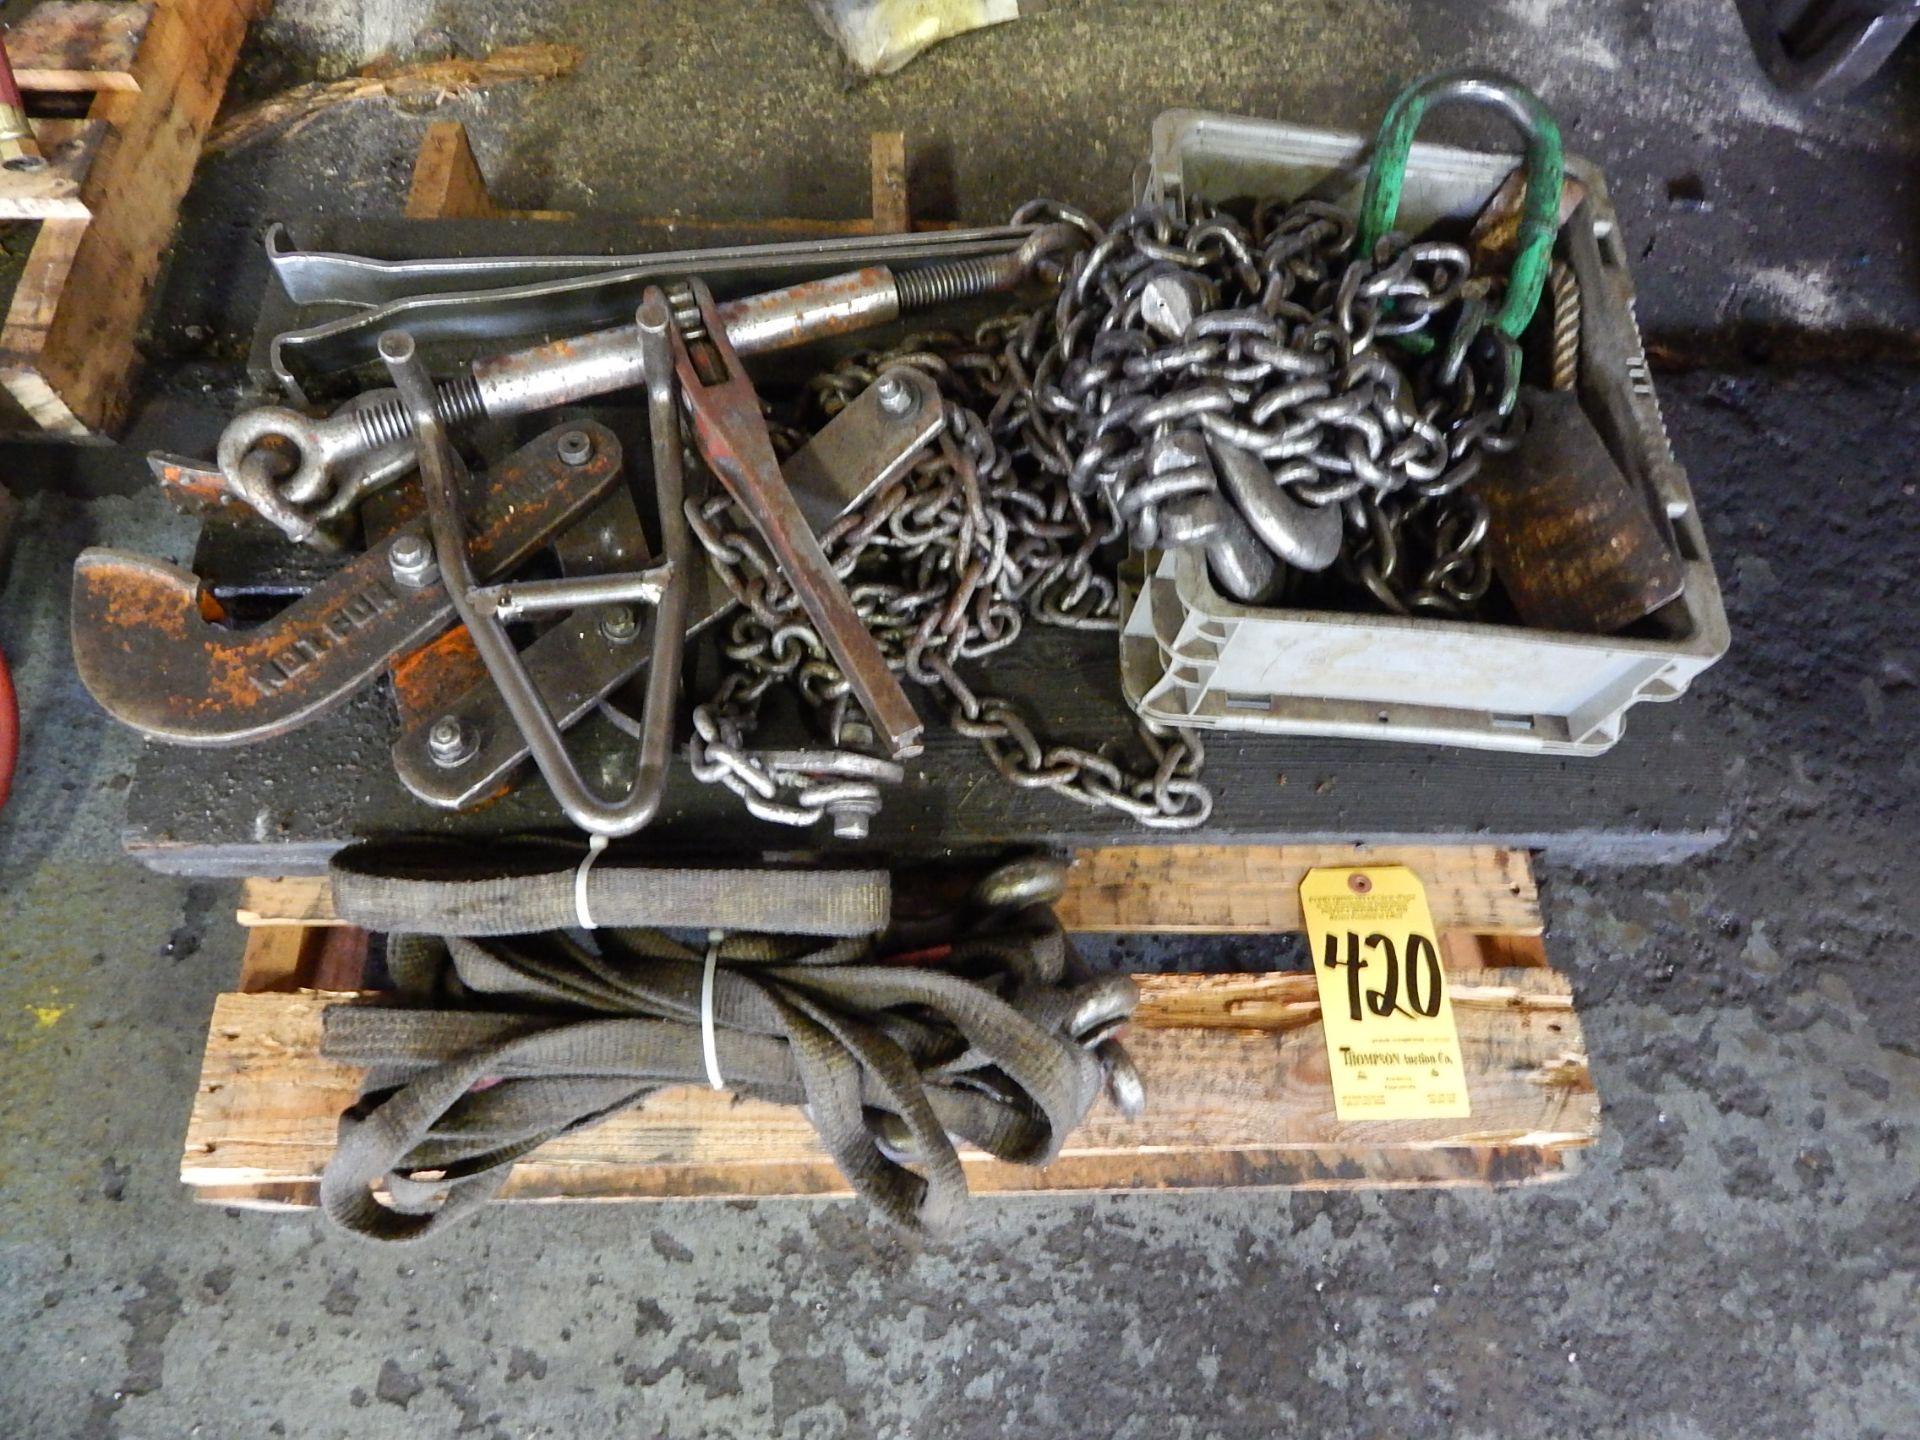 (2) Skid Lots of Skid Puller, Lifting Chain, Binder, Etc.